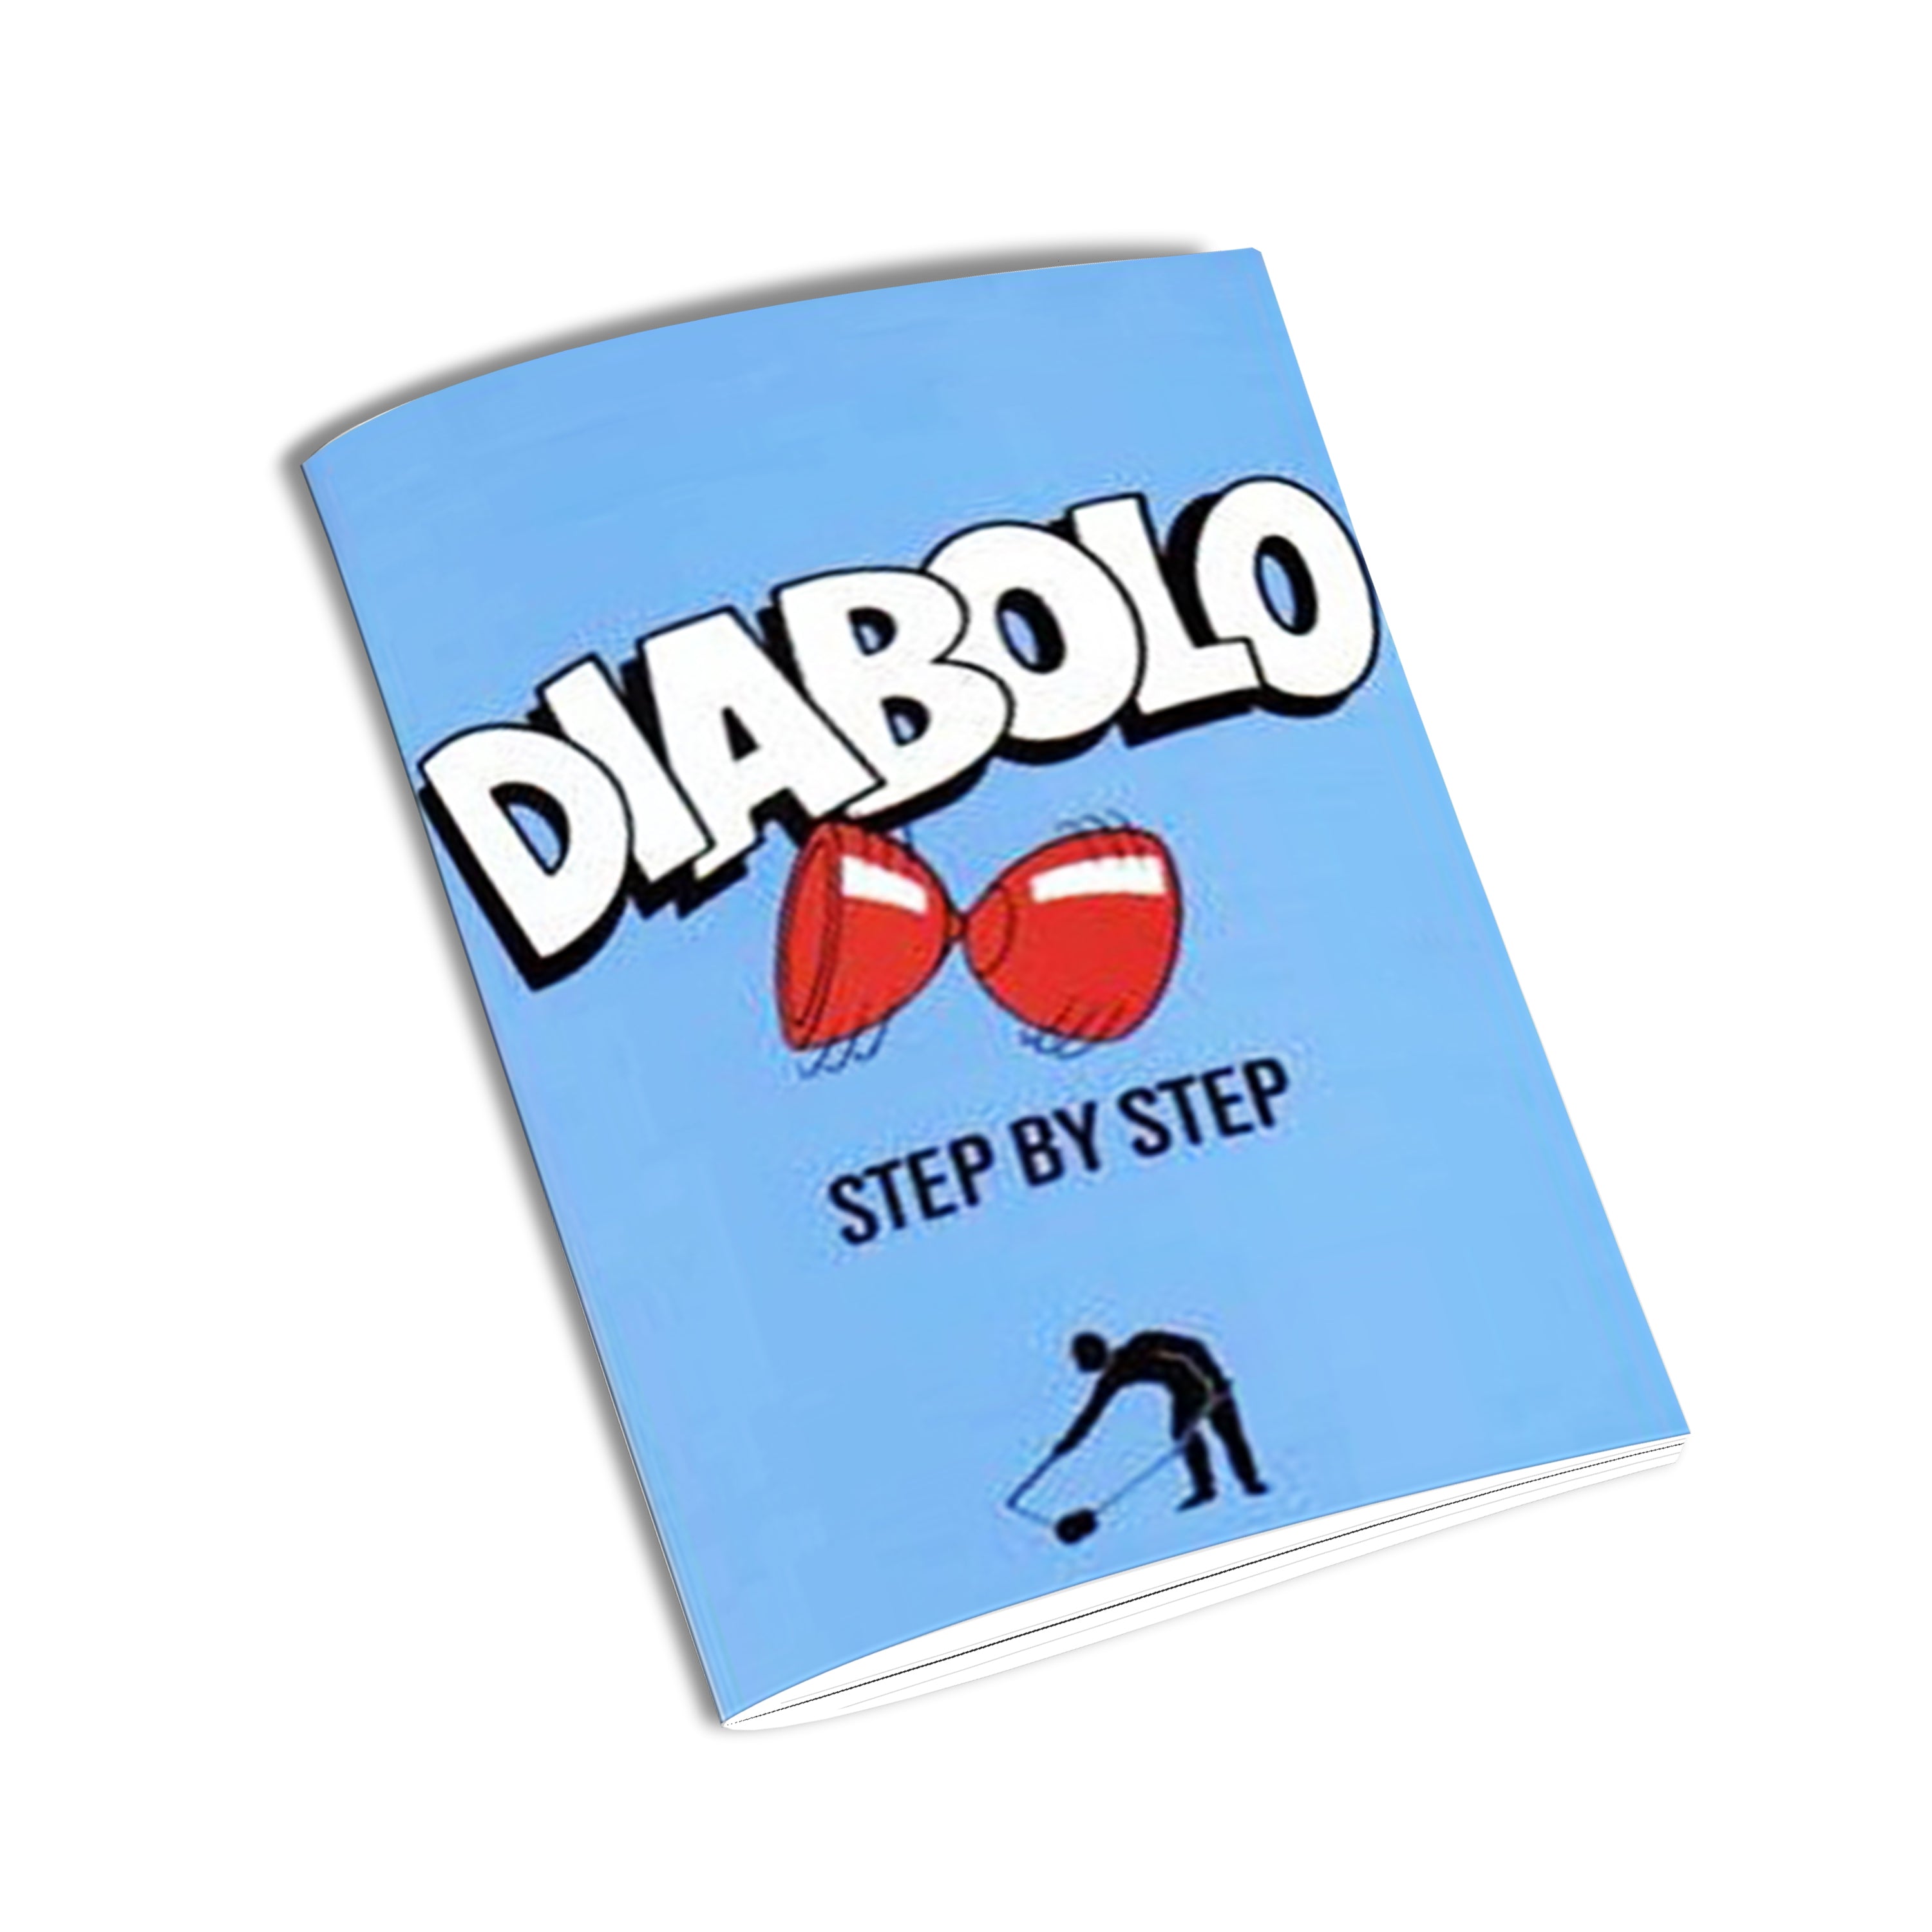 Step by Step Diabolo (Diabolo Book)